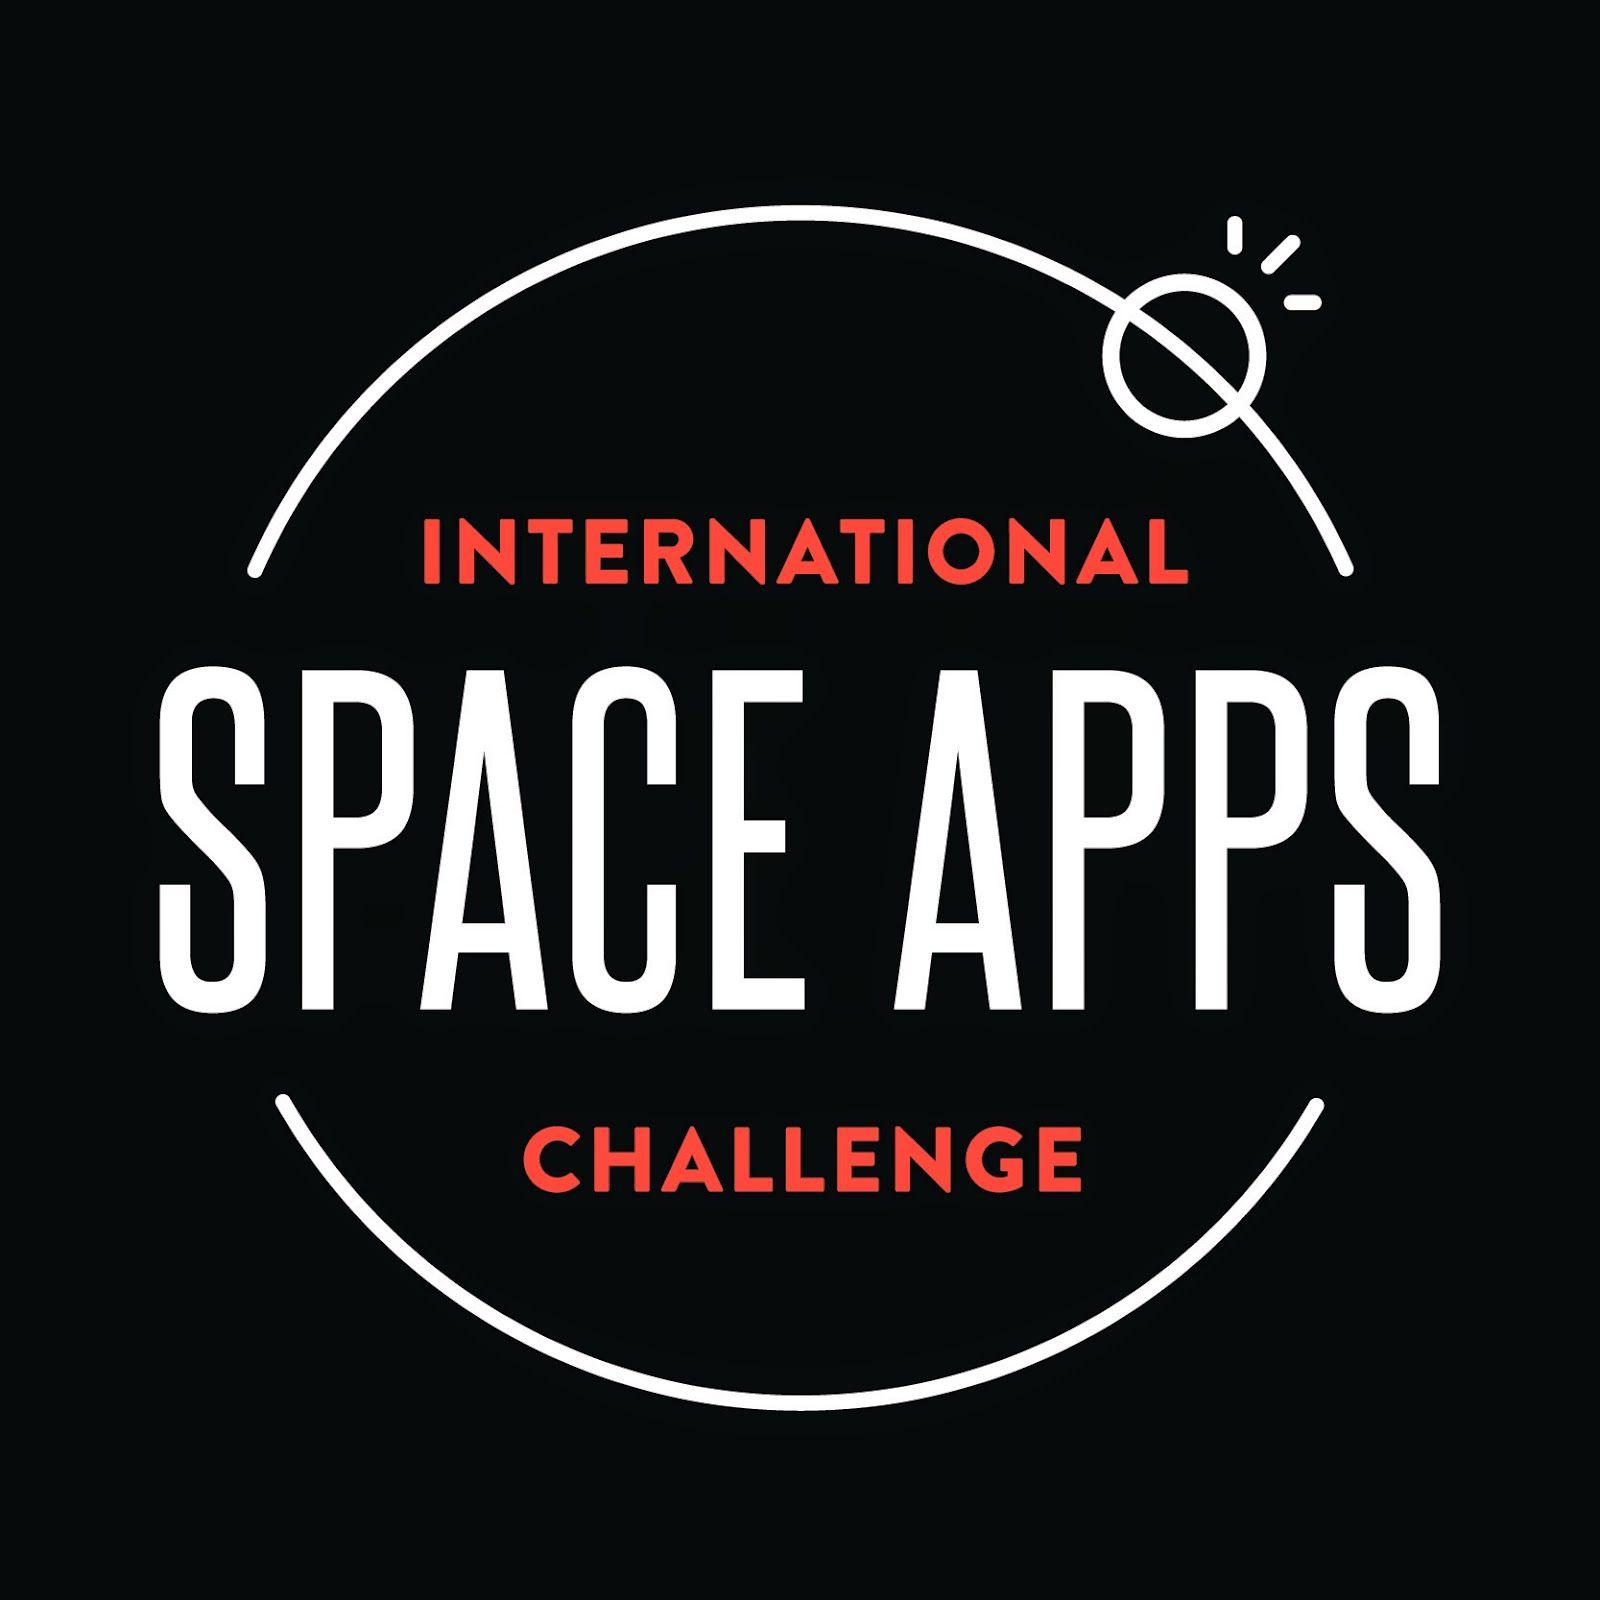 International NASA Logo - NASA Announces Dates for One of World's Largest Hackathons